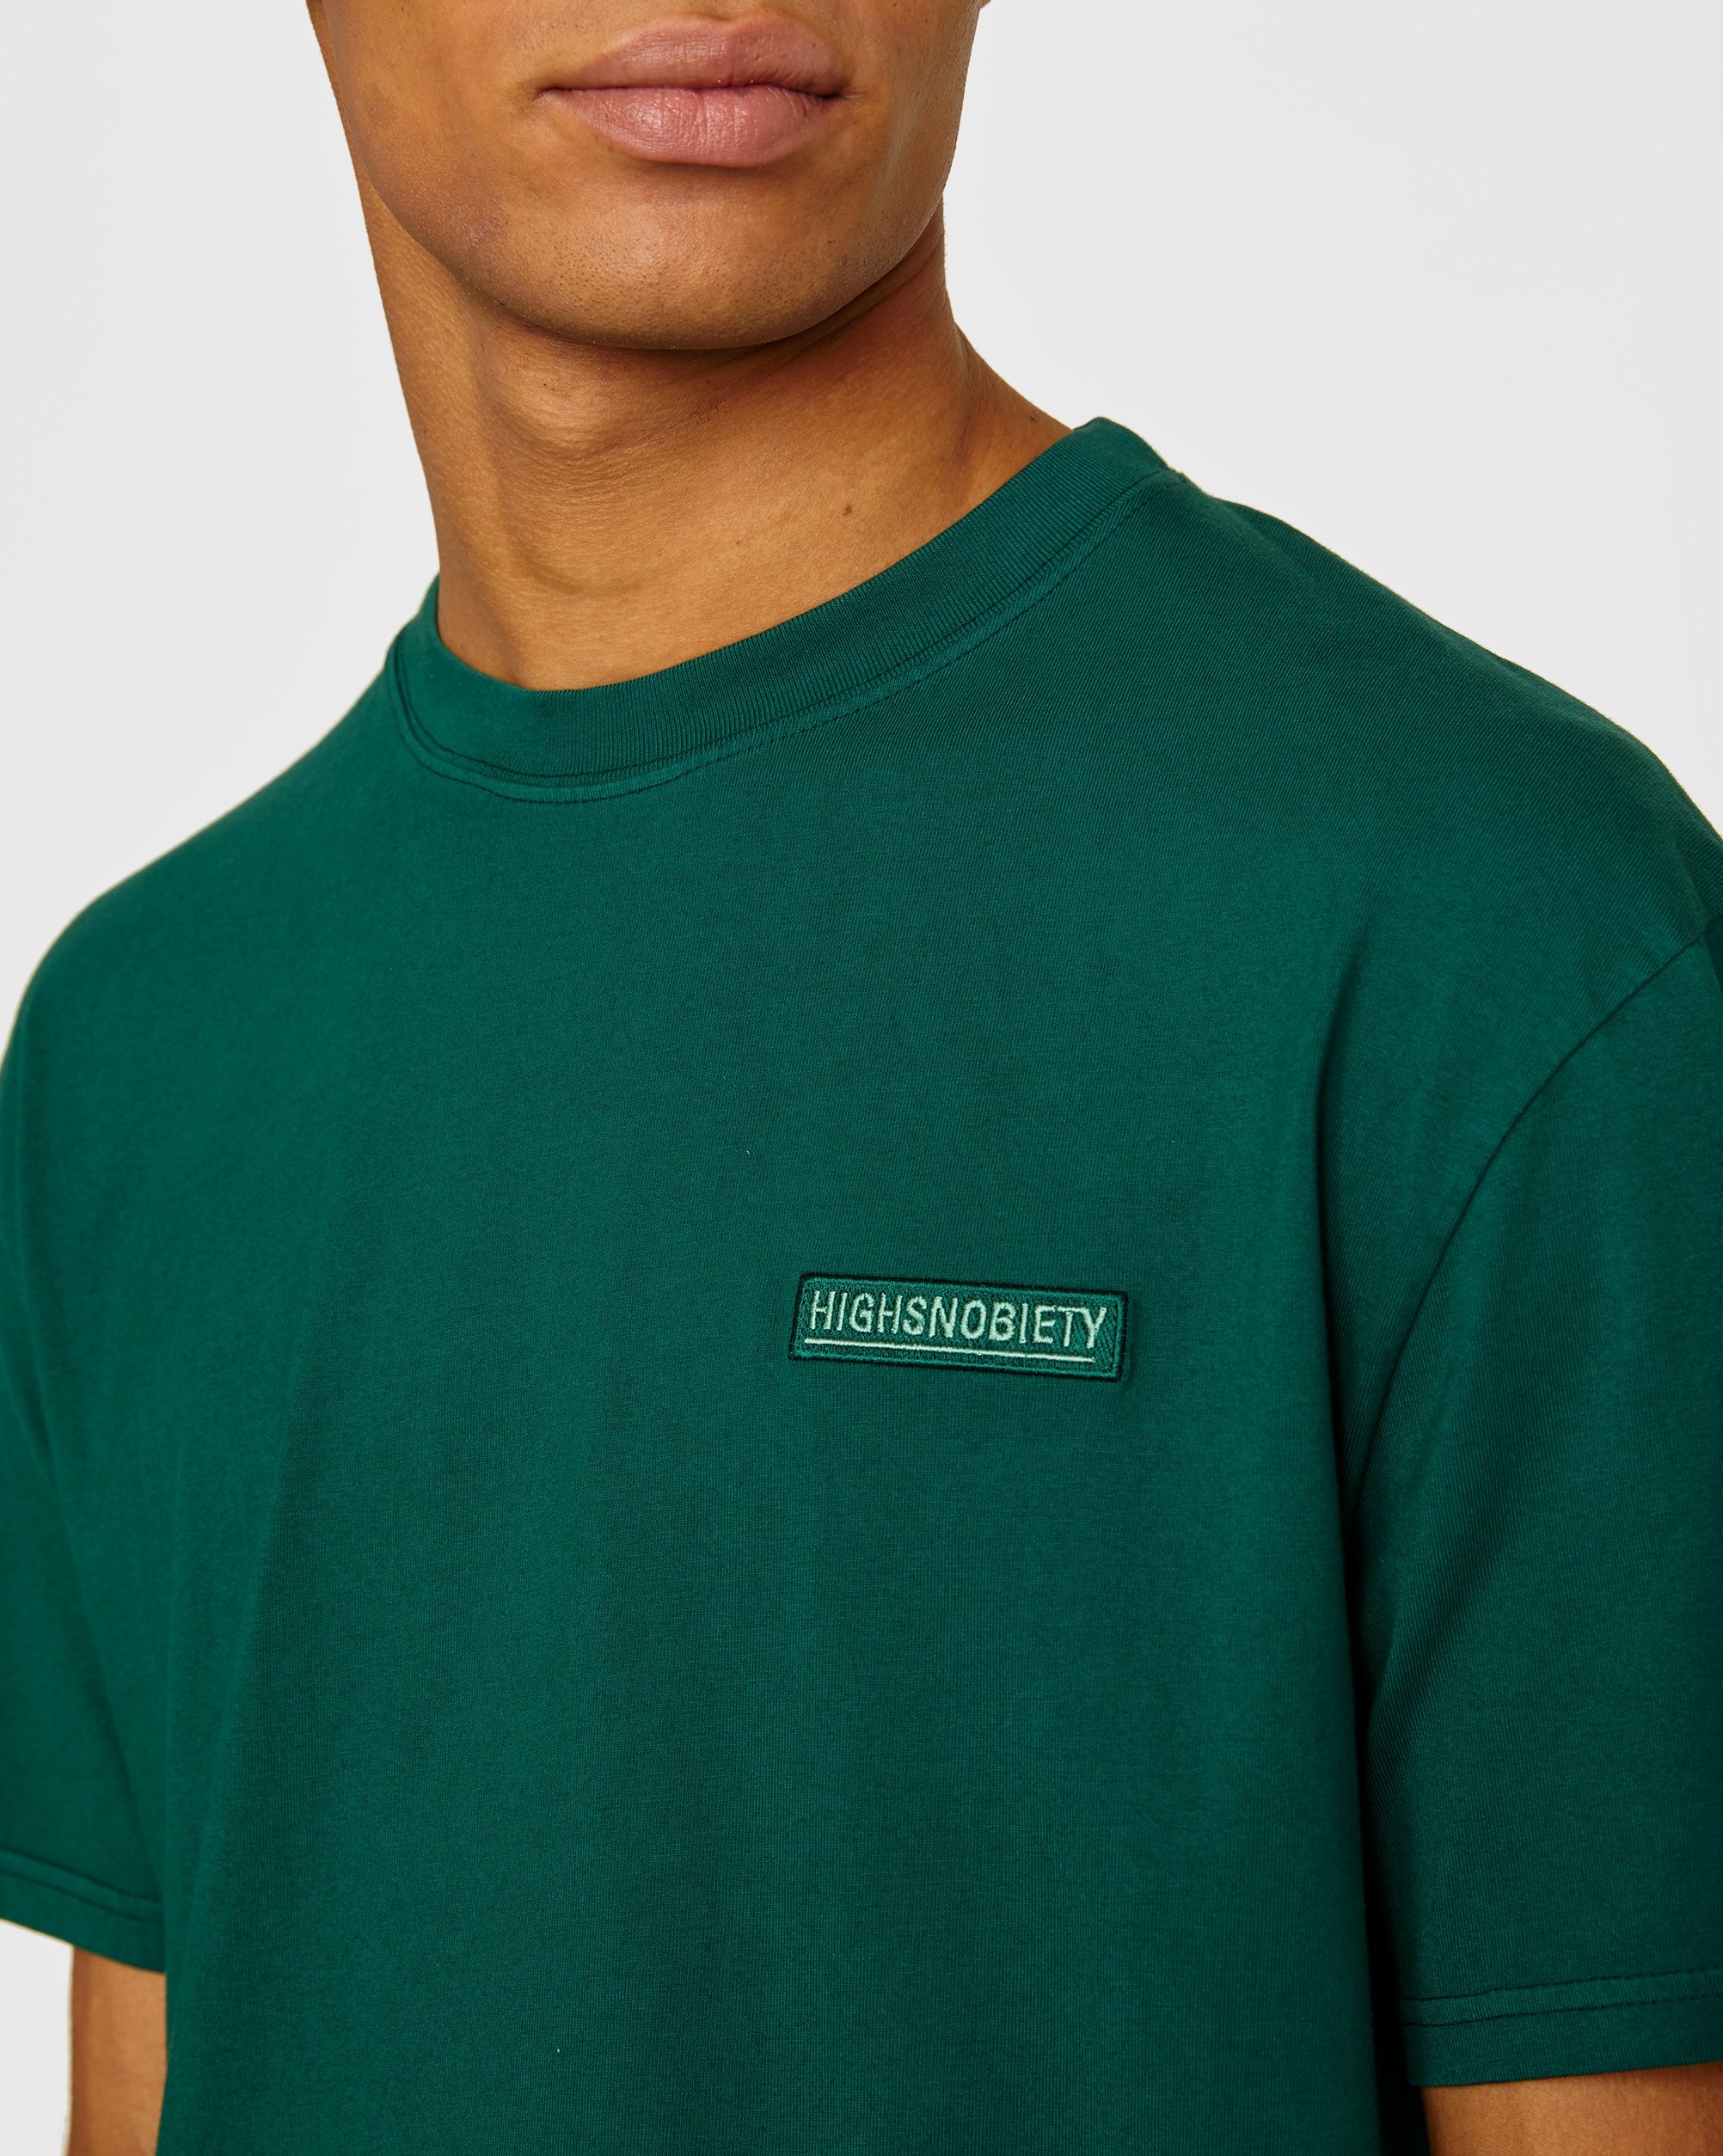 Highsnobiety – Staples T-Shirt Green - Tops - Green - Image 5